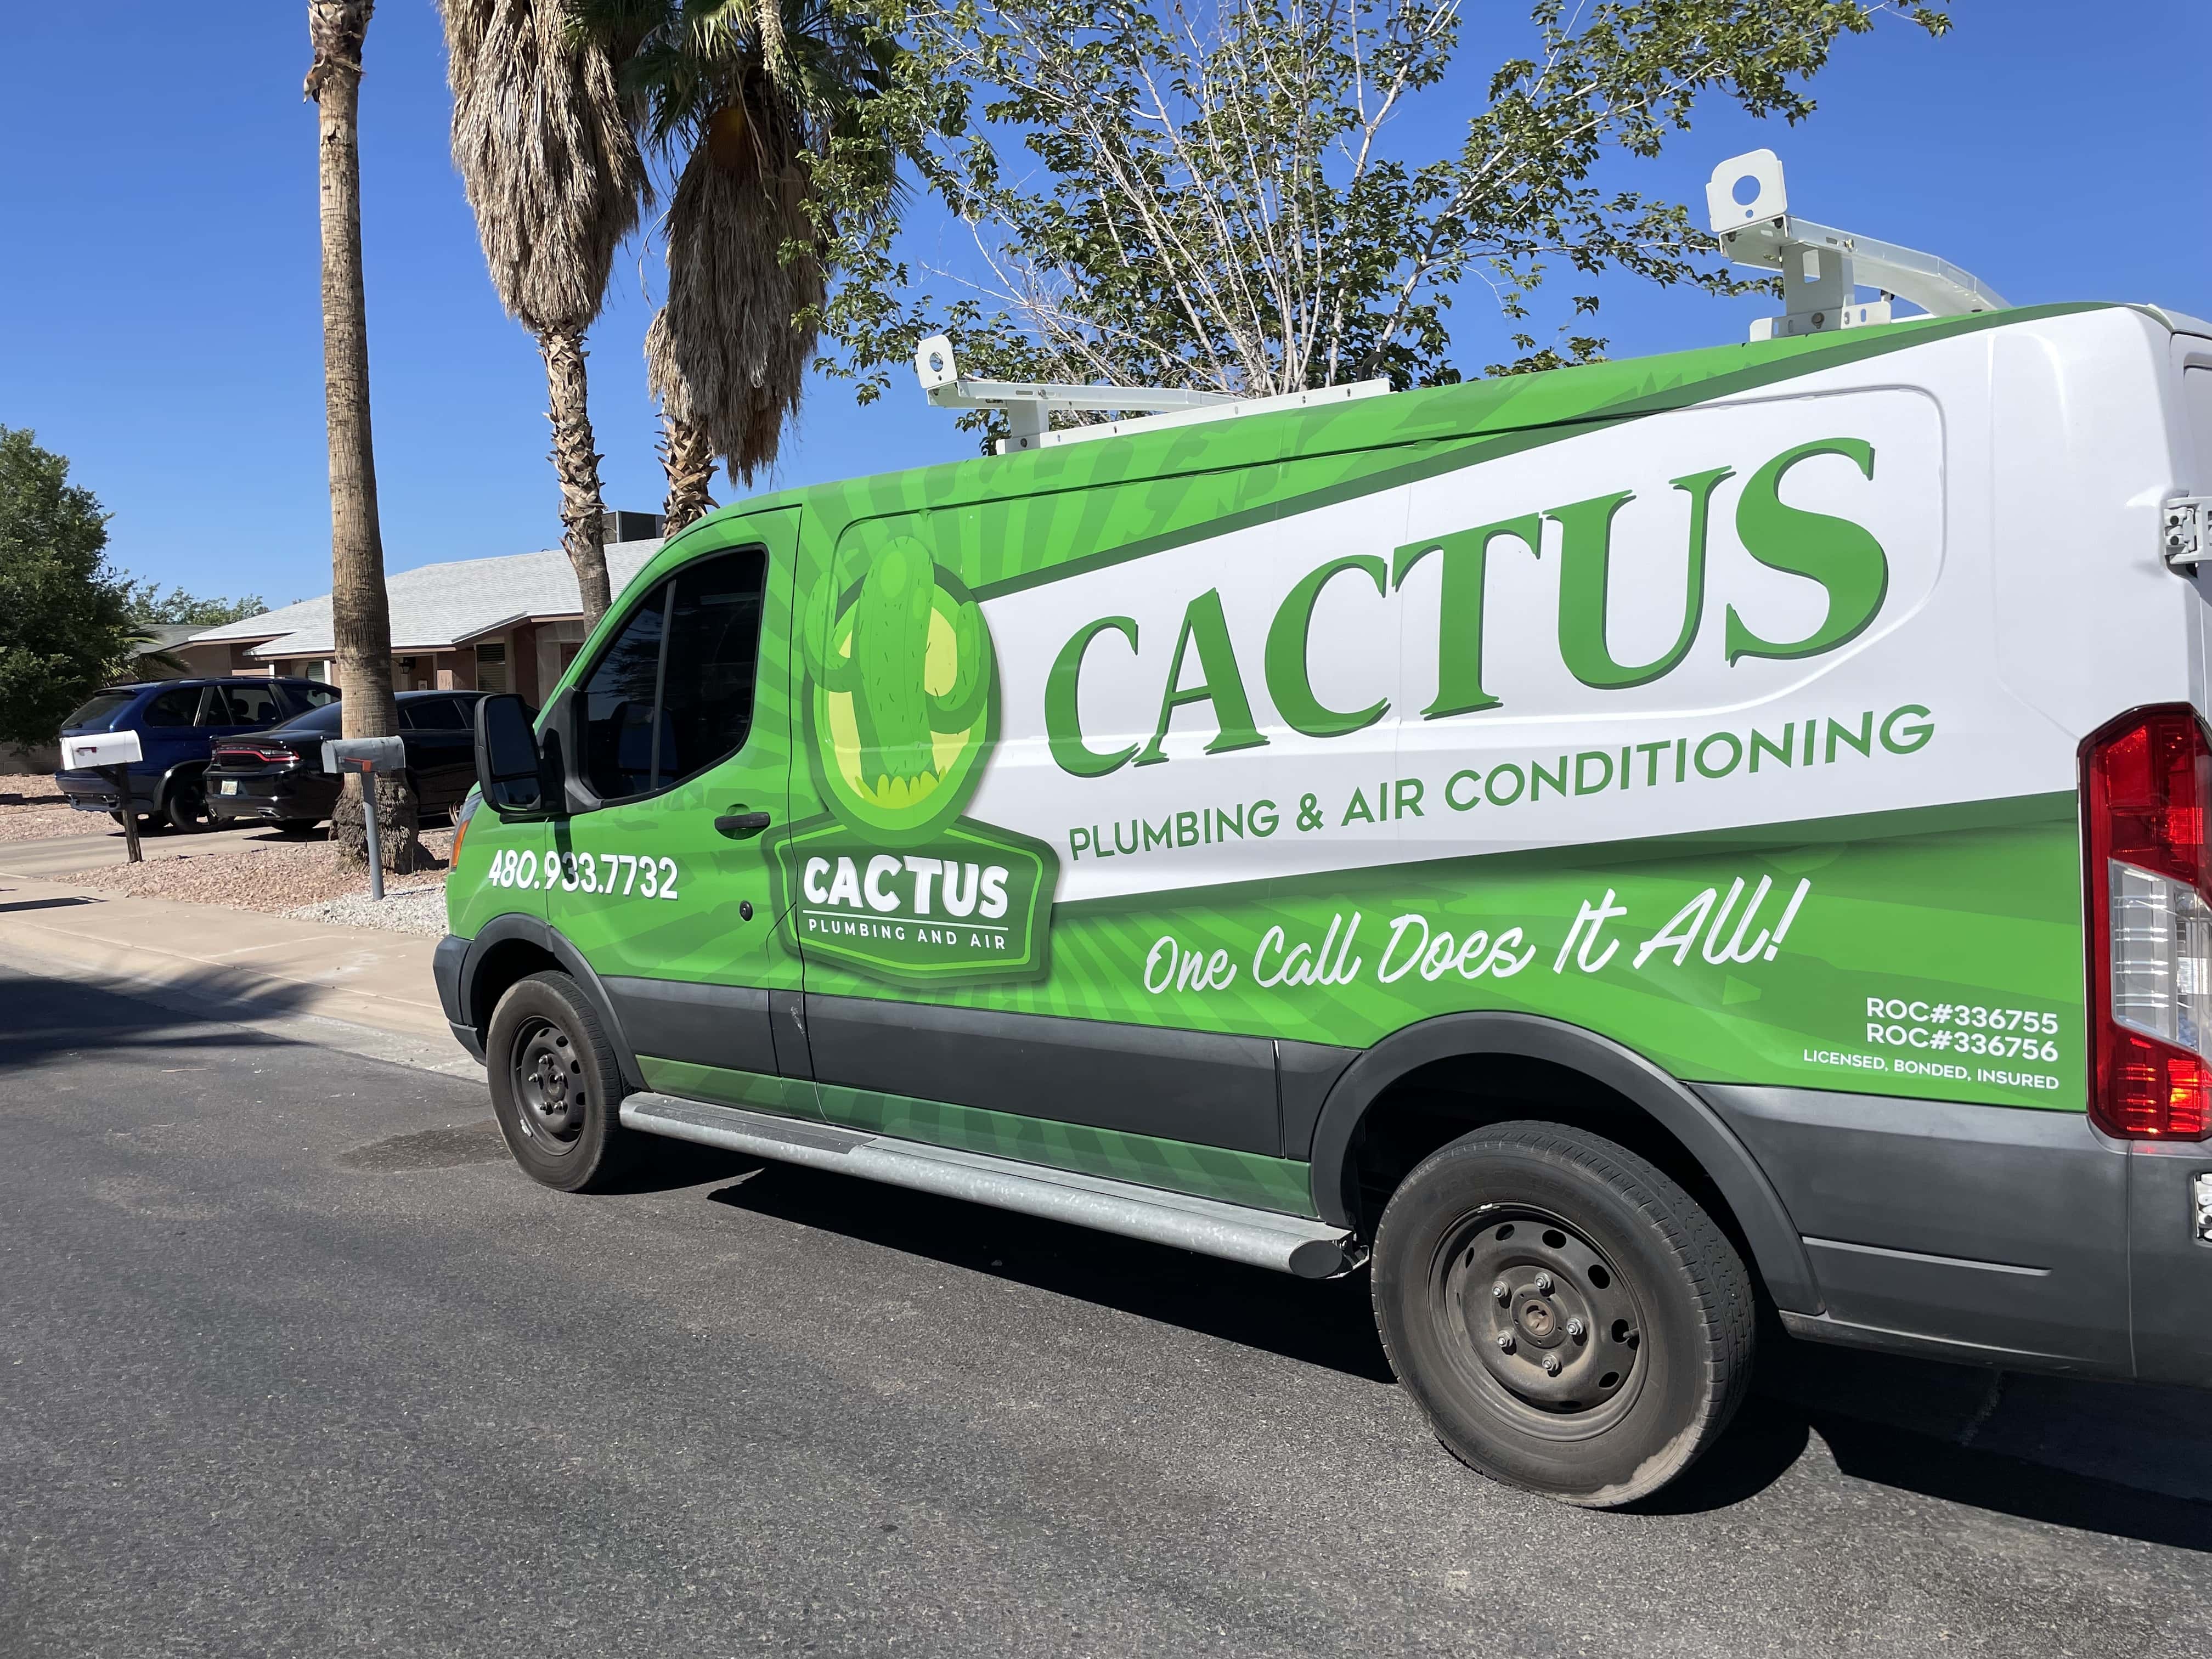 Cactus Plumbing And Air - Gilbert (AZ 85234), US, emergency plumber